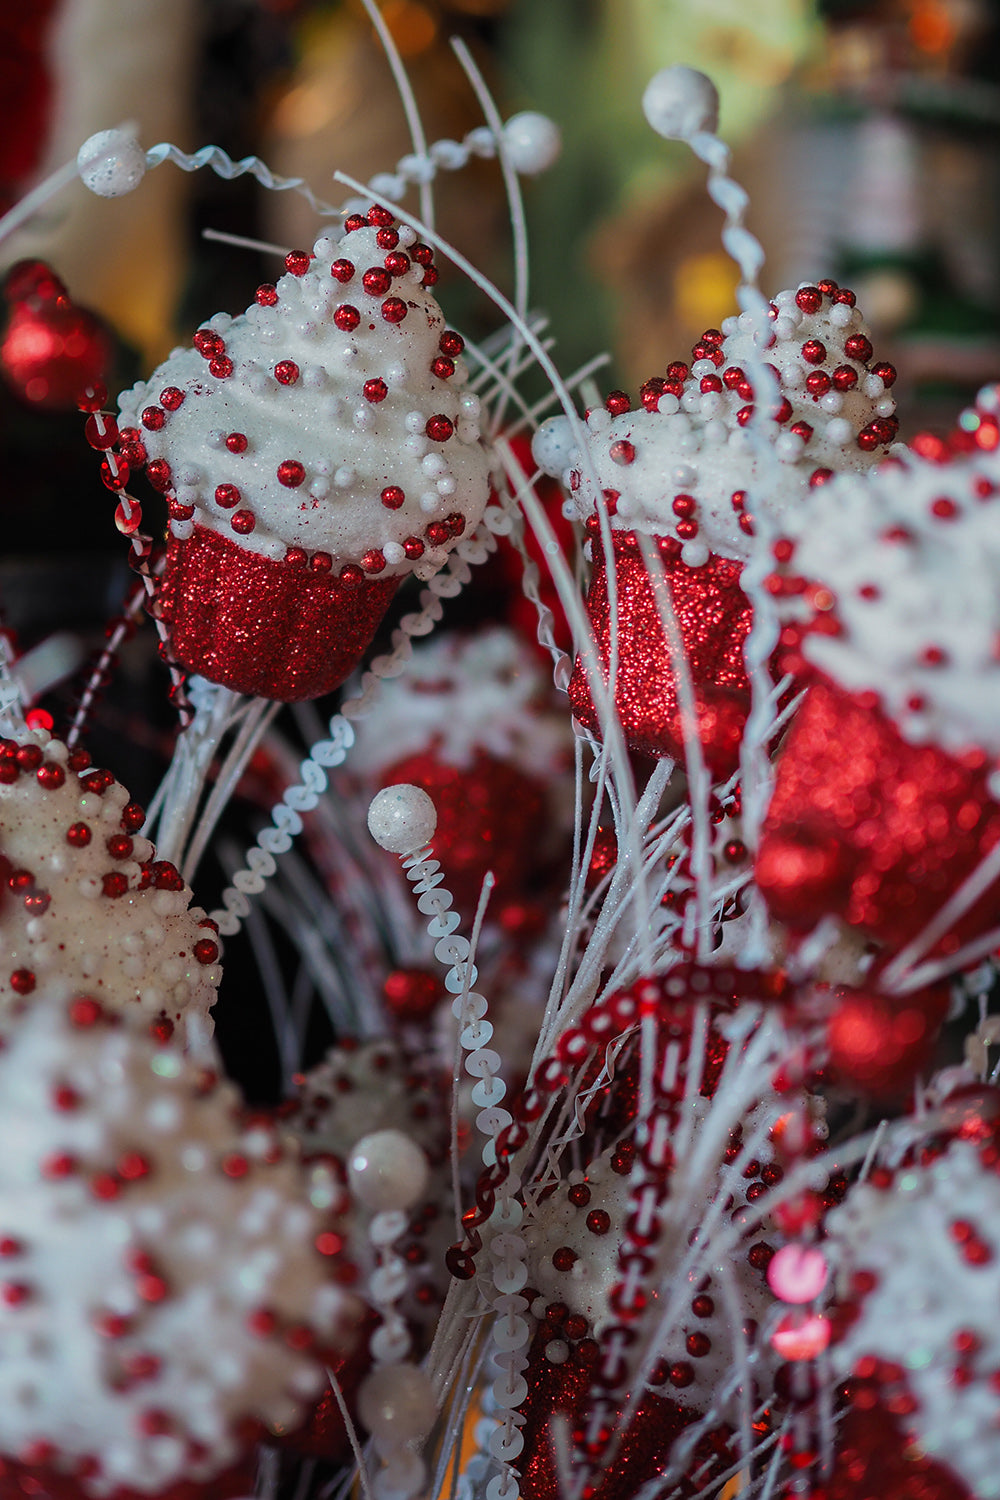 Viv! Christmas Kersttak - Glitter Cupcakes - rood wit - 82cm